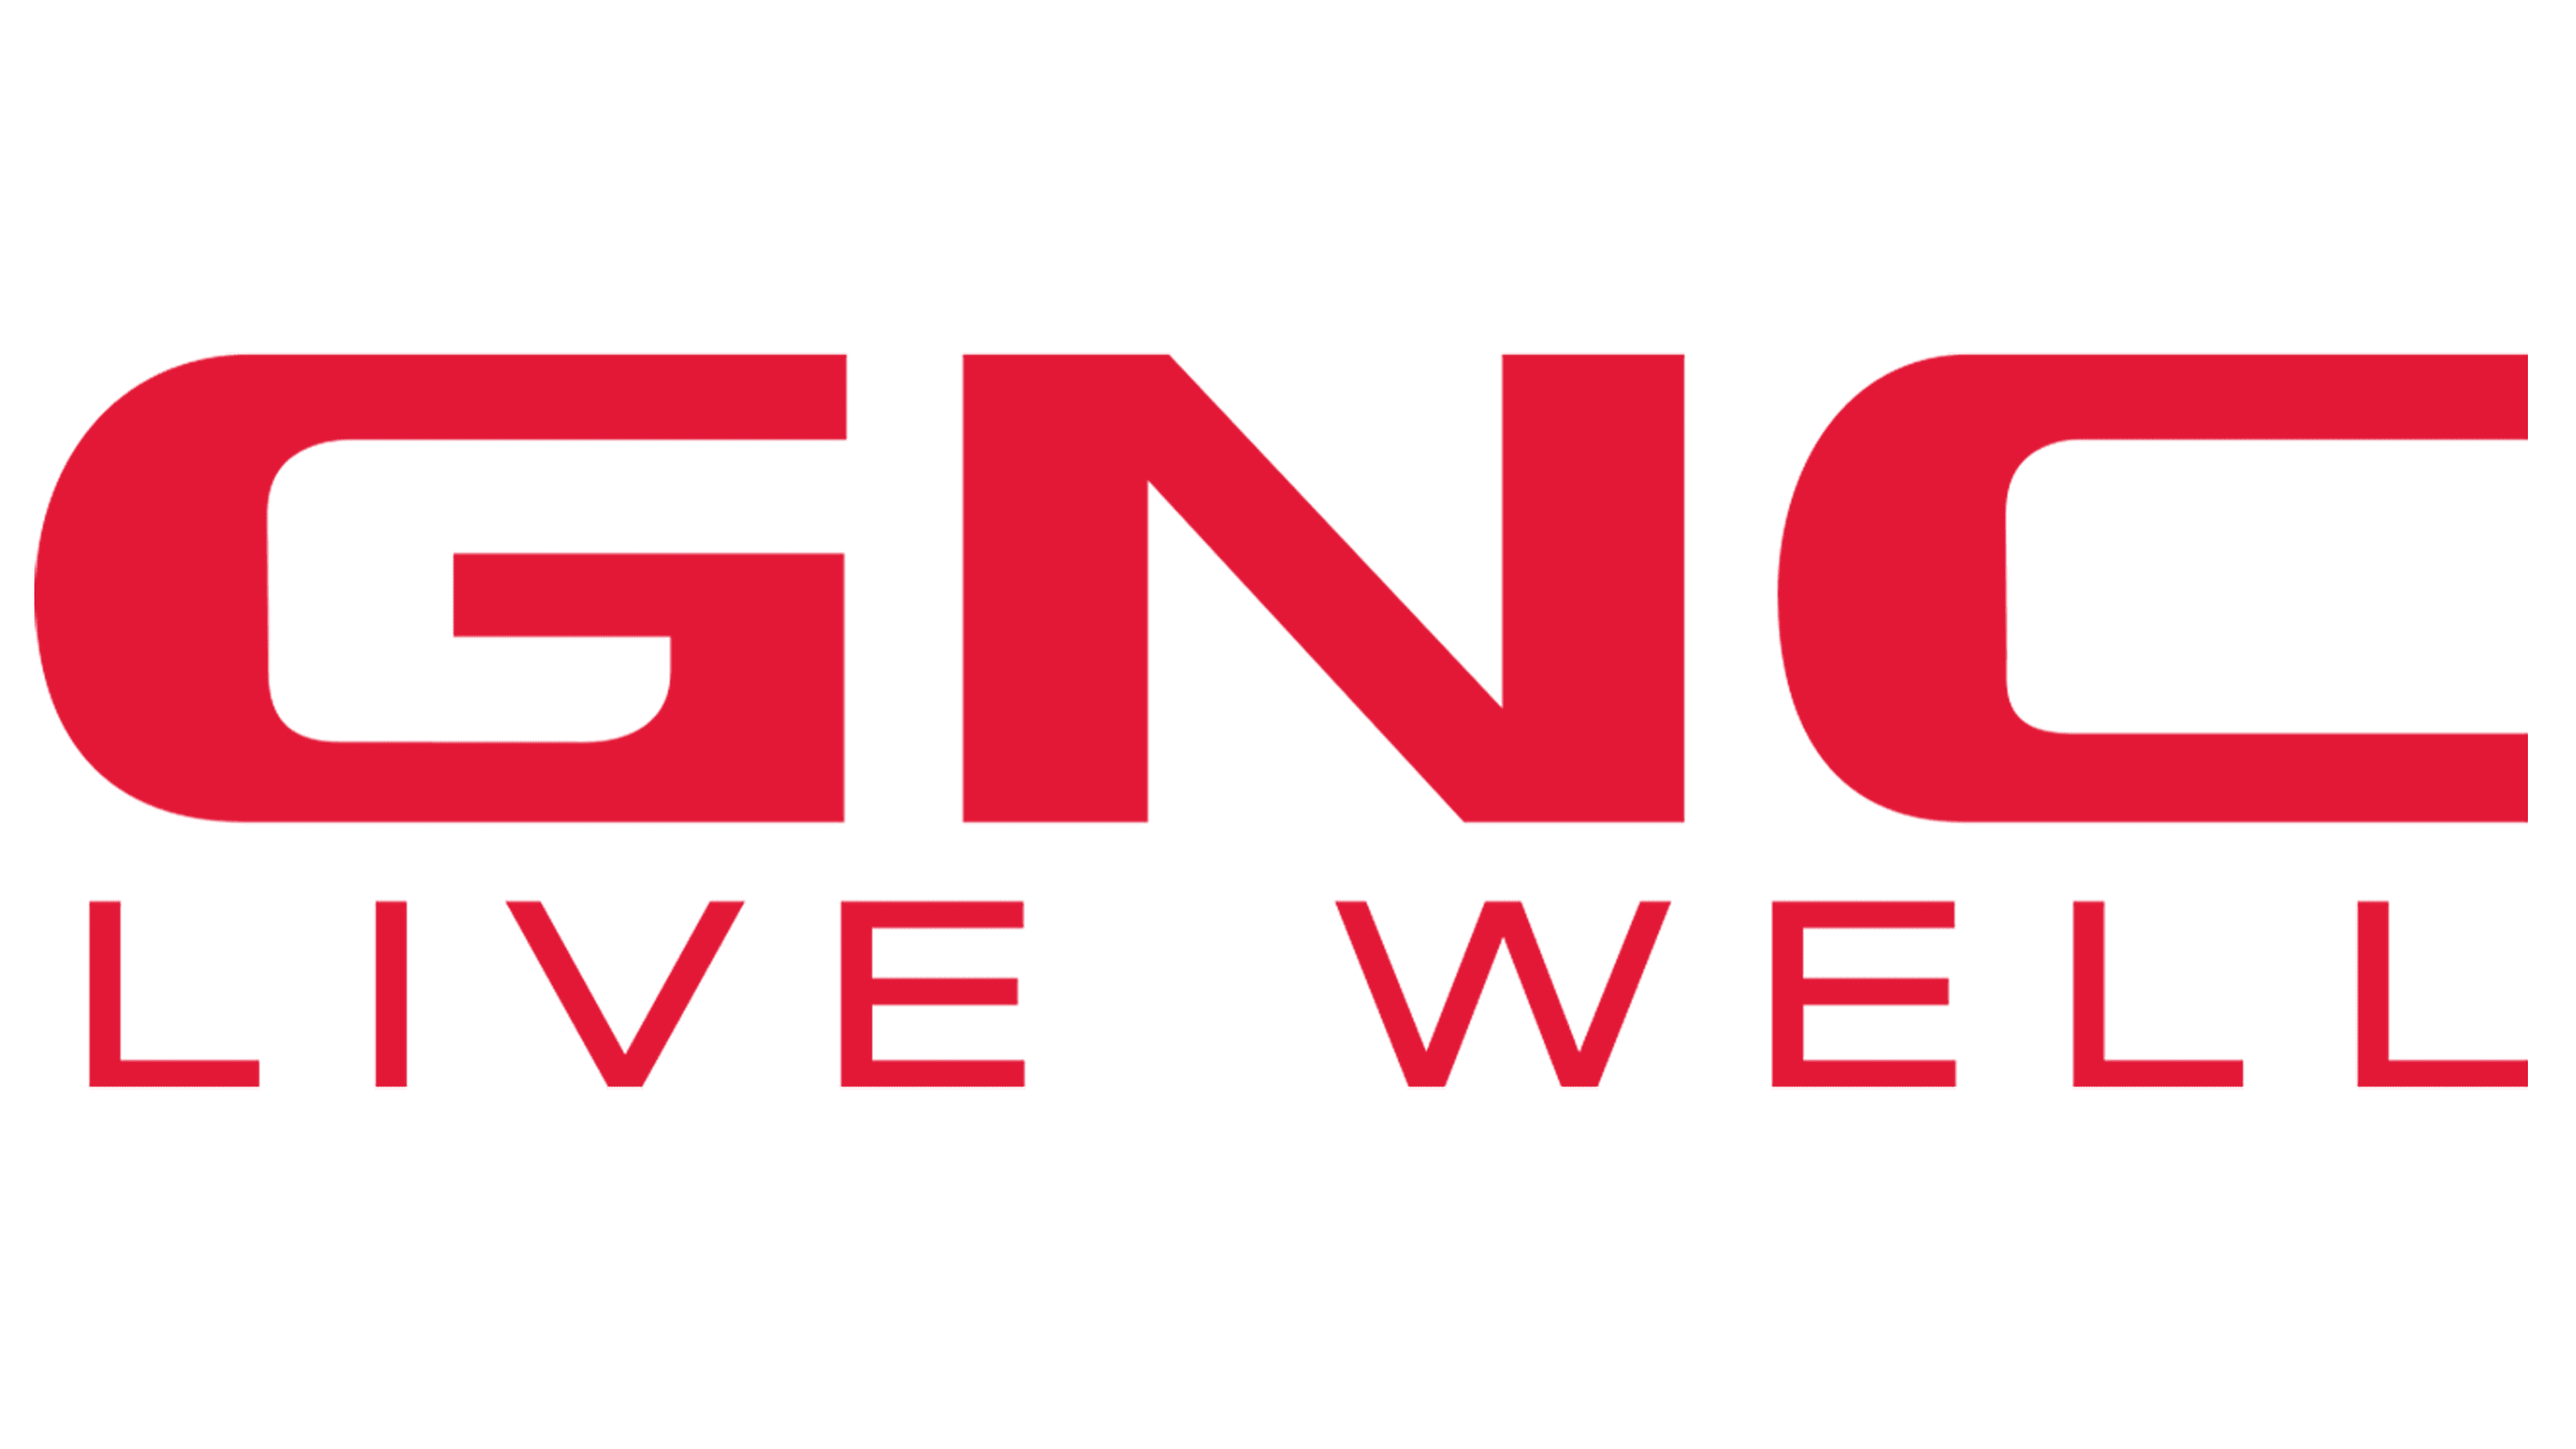 GNC-Logo.png